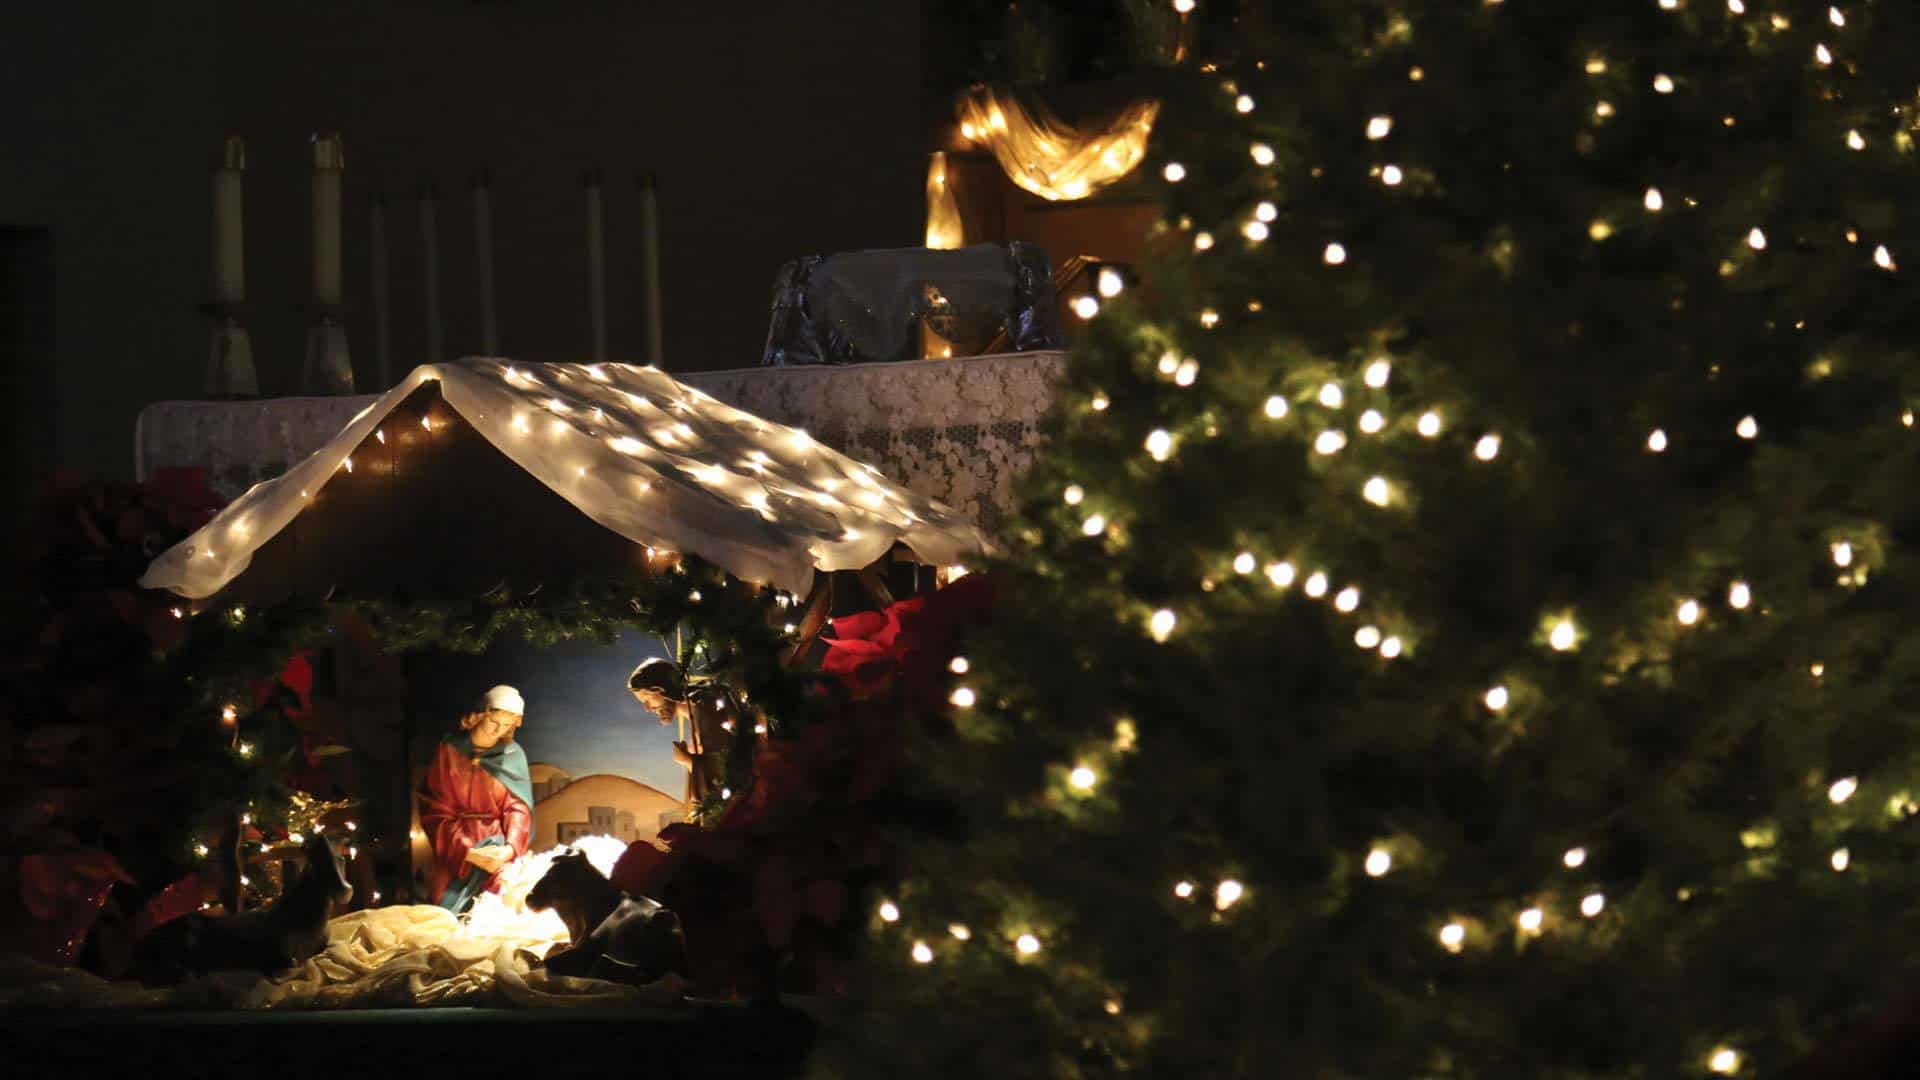 Nativity on the Altar by a Christmas Tree